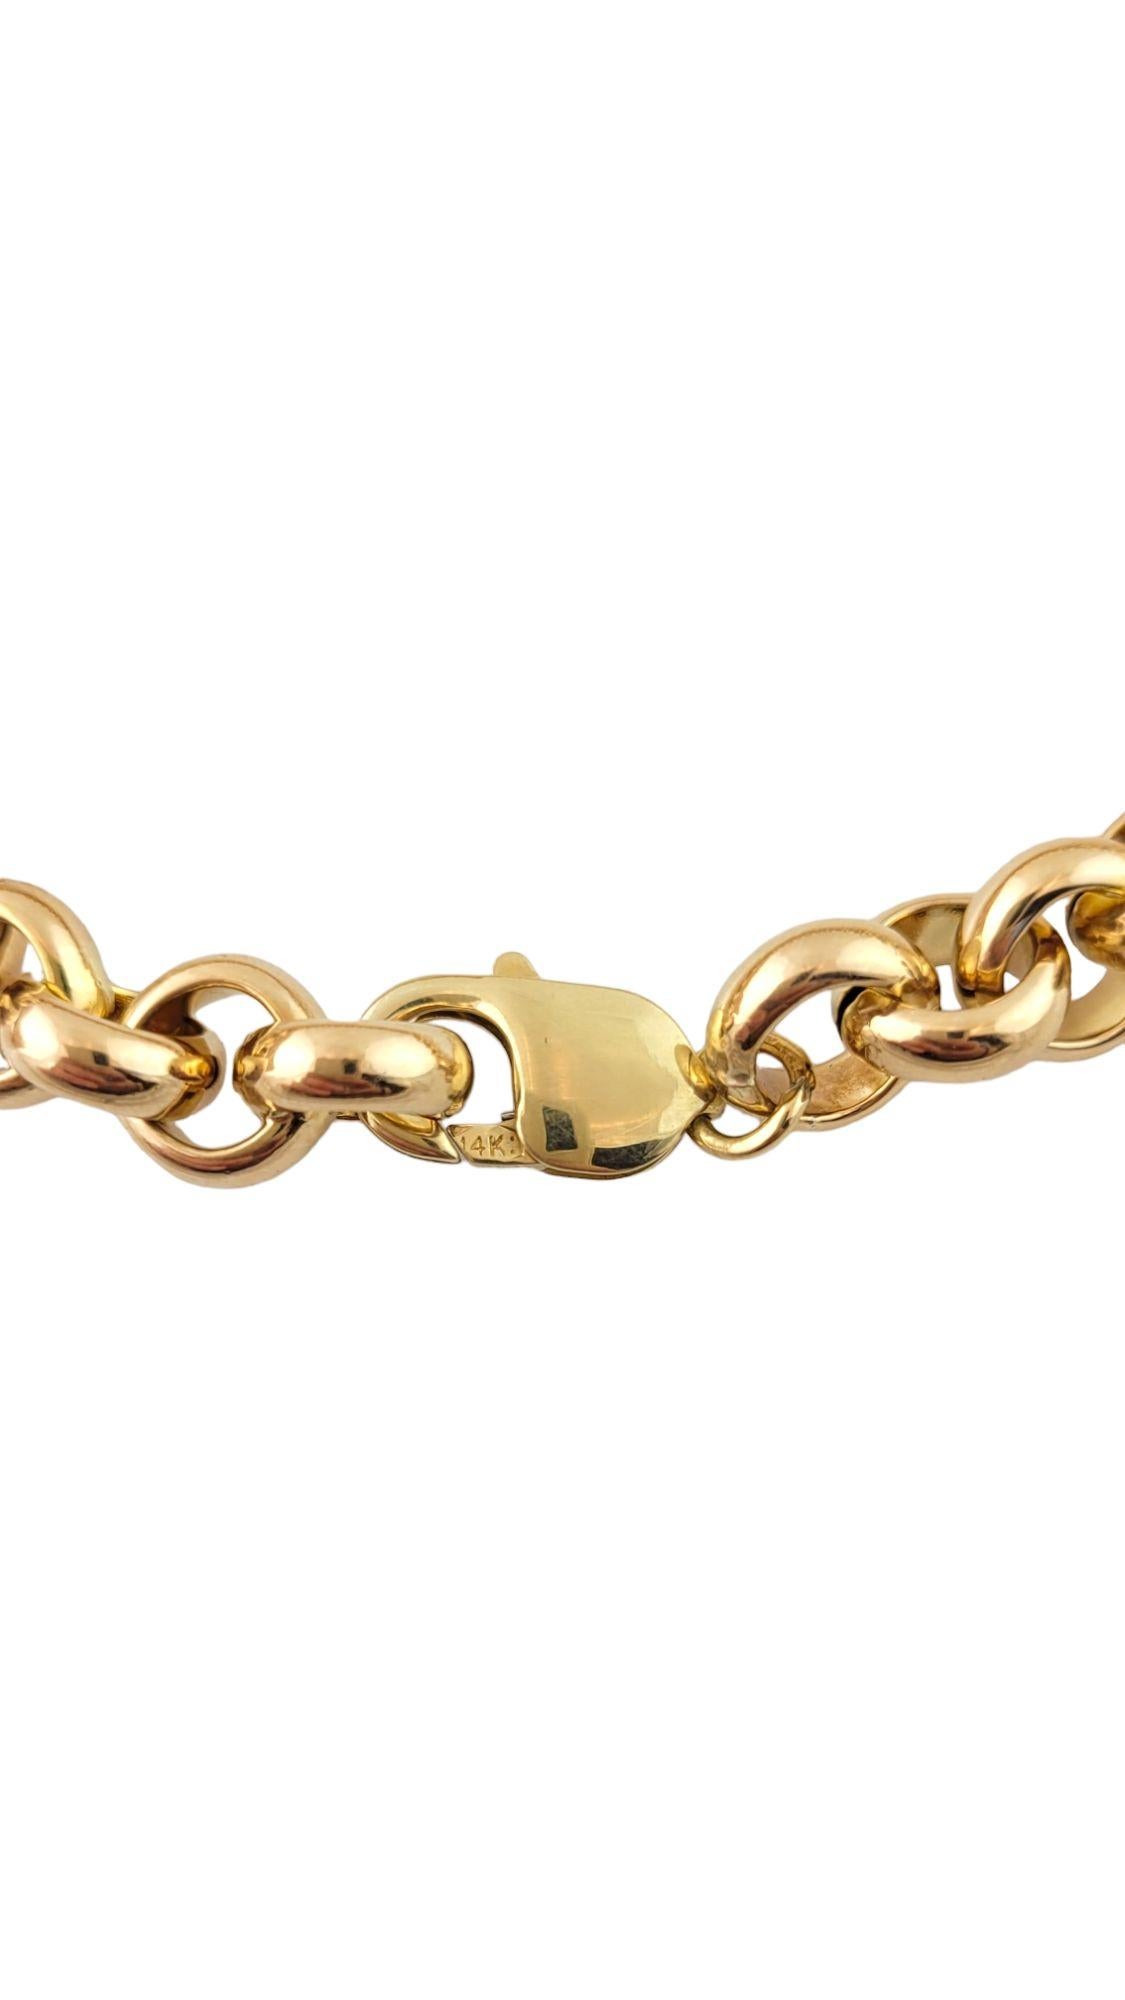 Vintage 14K Yellow Gold Rolo Link Bracelet

Gorgeous 14K gold bracelet with interlocking links!

Size: 7